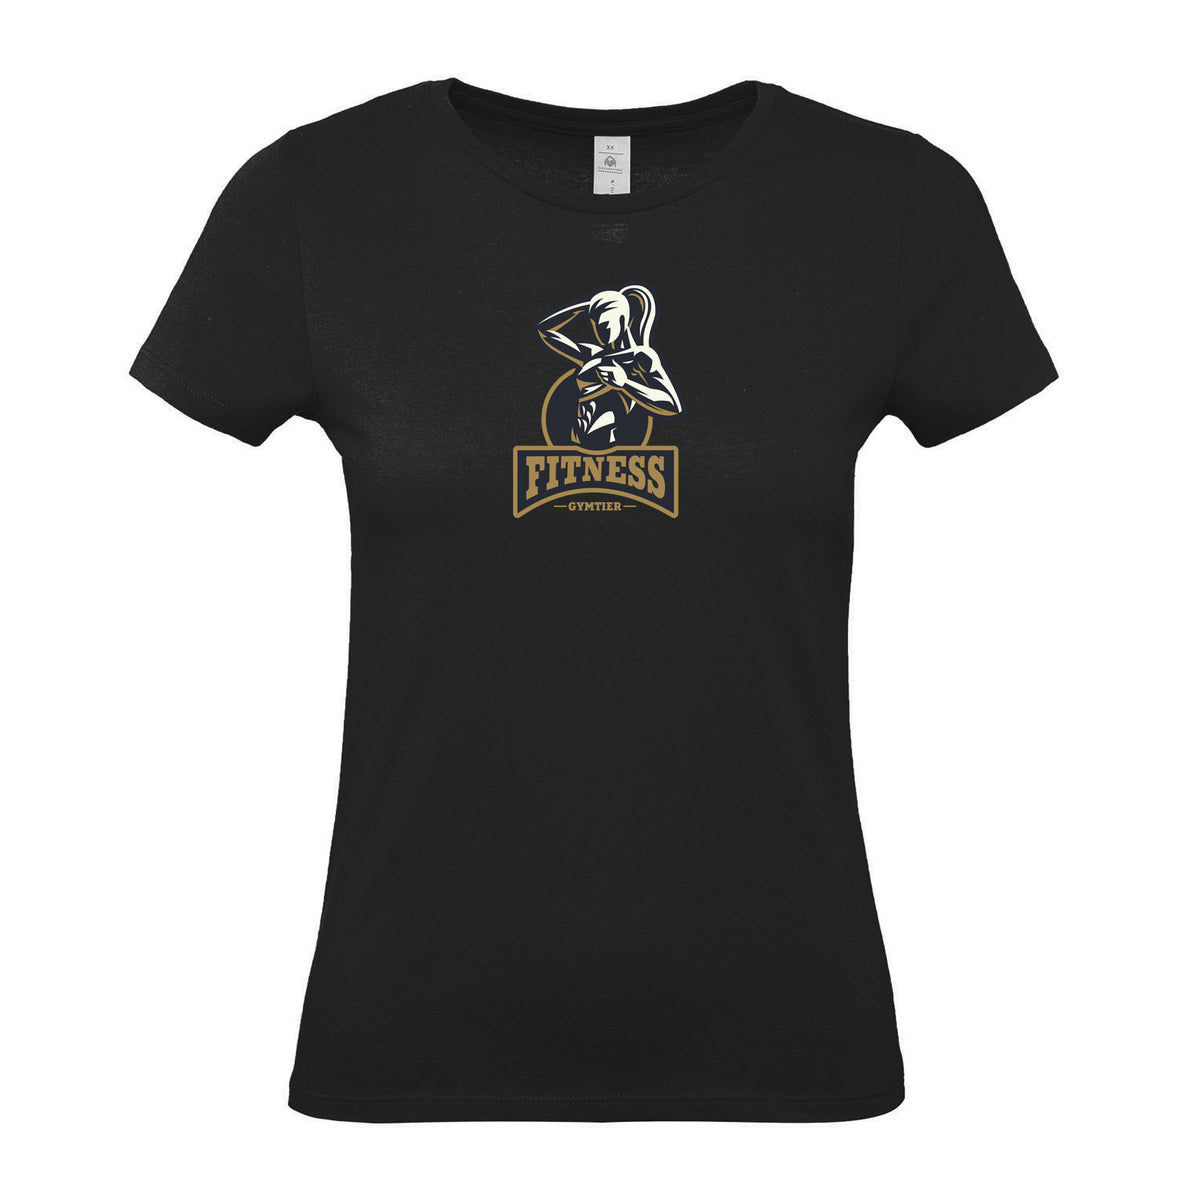 Strong Woman Fitness - Women's Gym T-Shirt